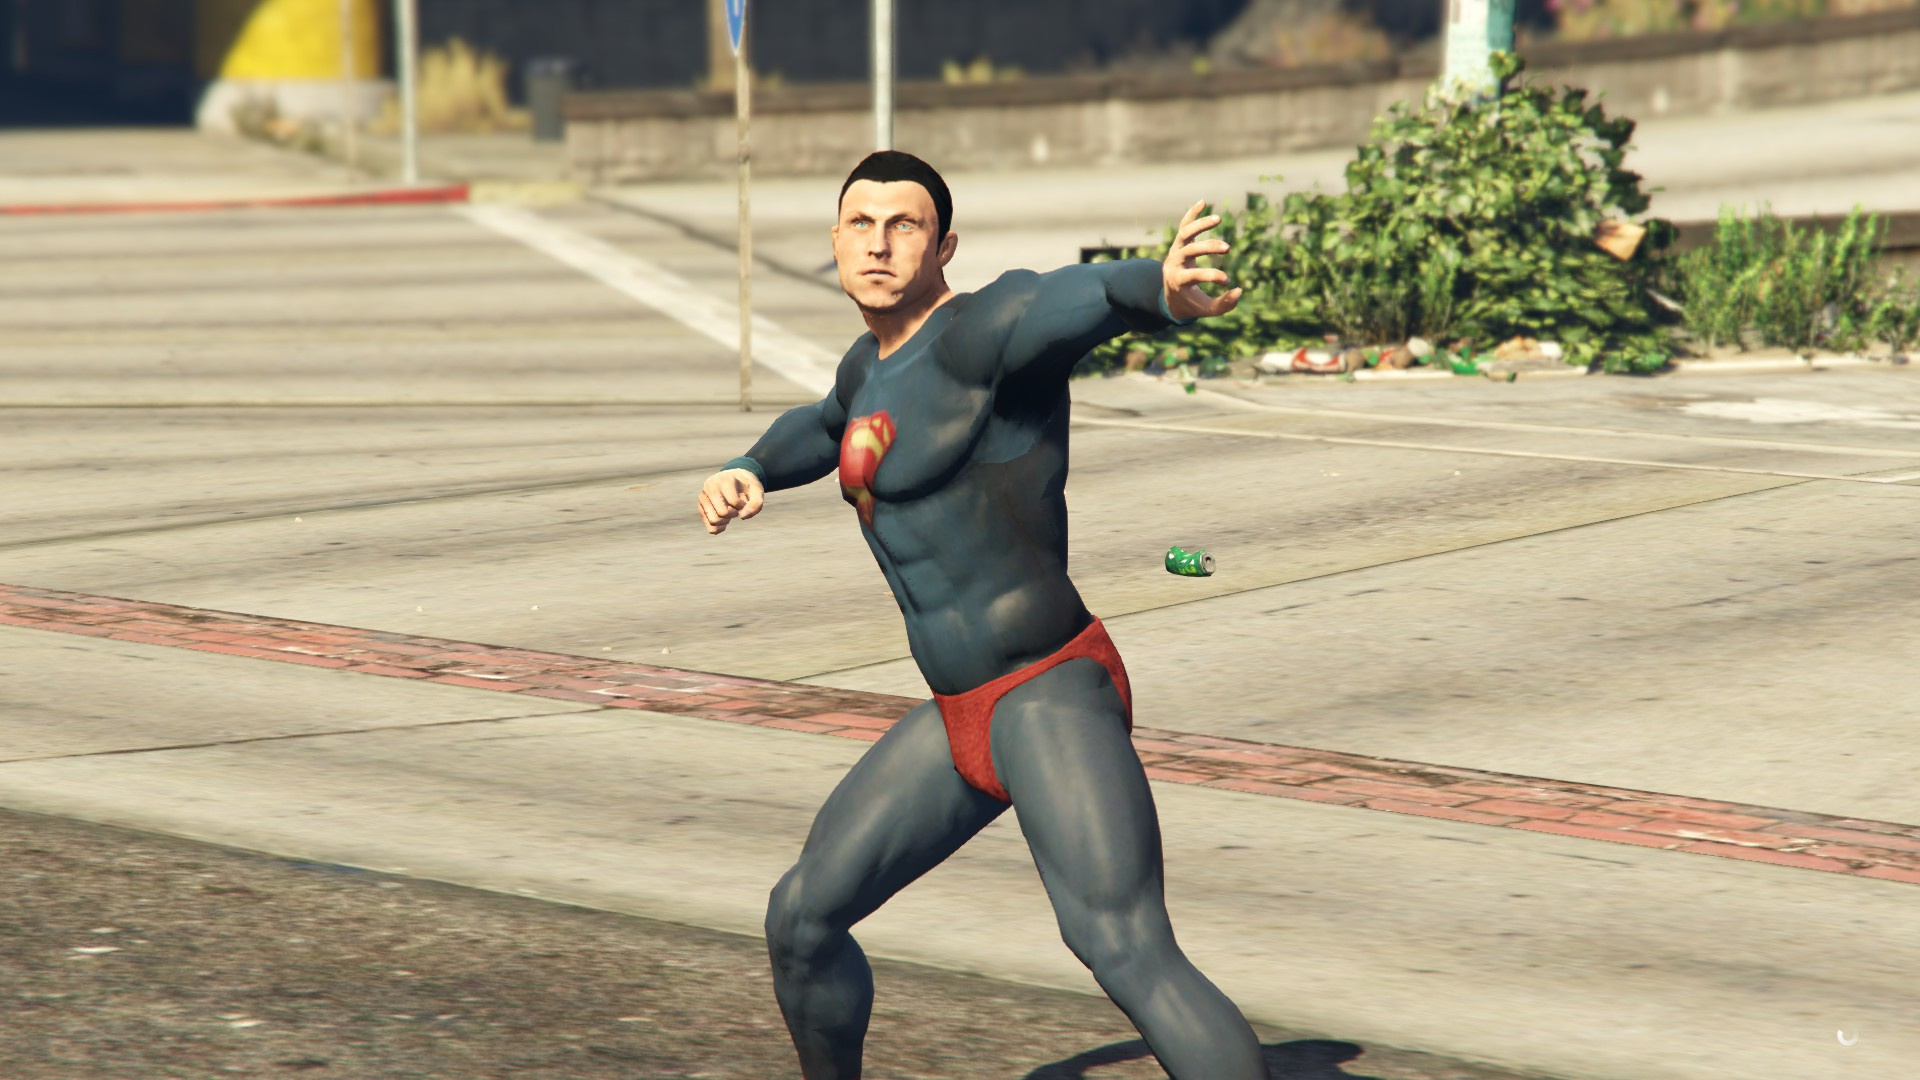 gta 5 superman mod how to imstall